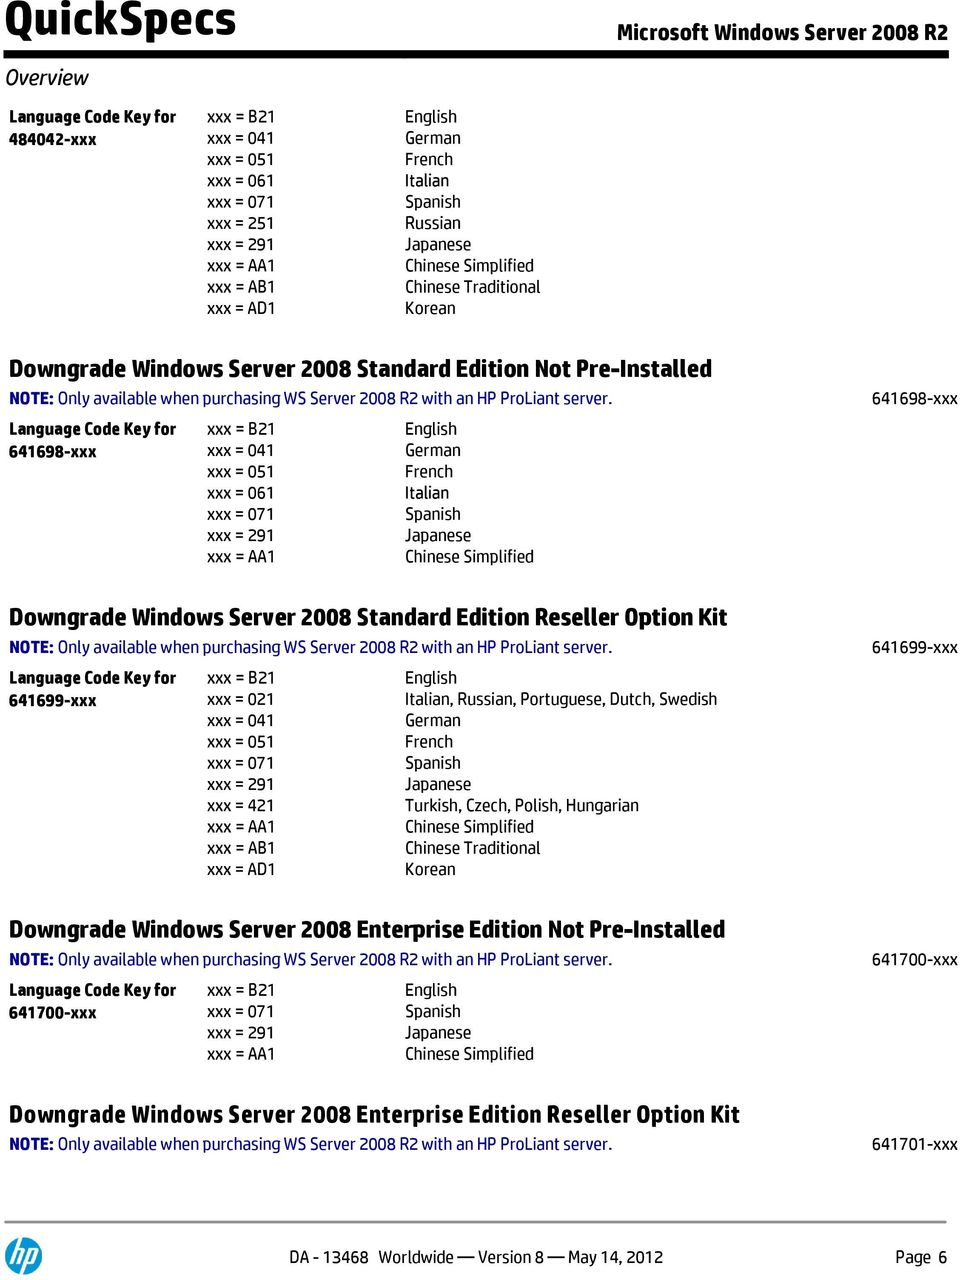 Portuguese, Dutch, Swedish Turkish, Czech, Polish, Hungarian Chinese Traditional 641699-xxx Downgrade Windows Server 2008 Enterprise Edition Not